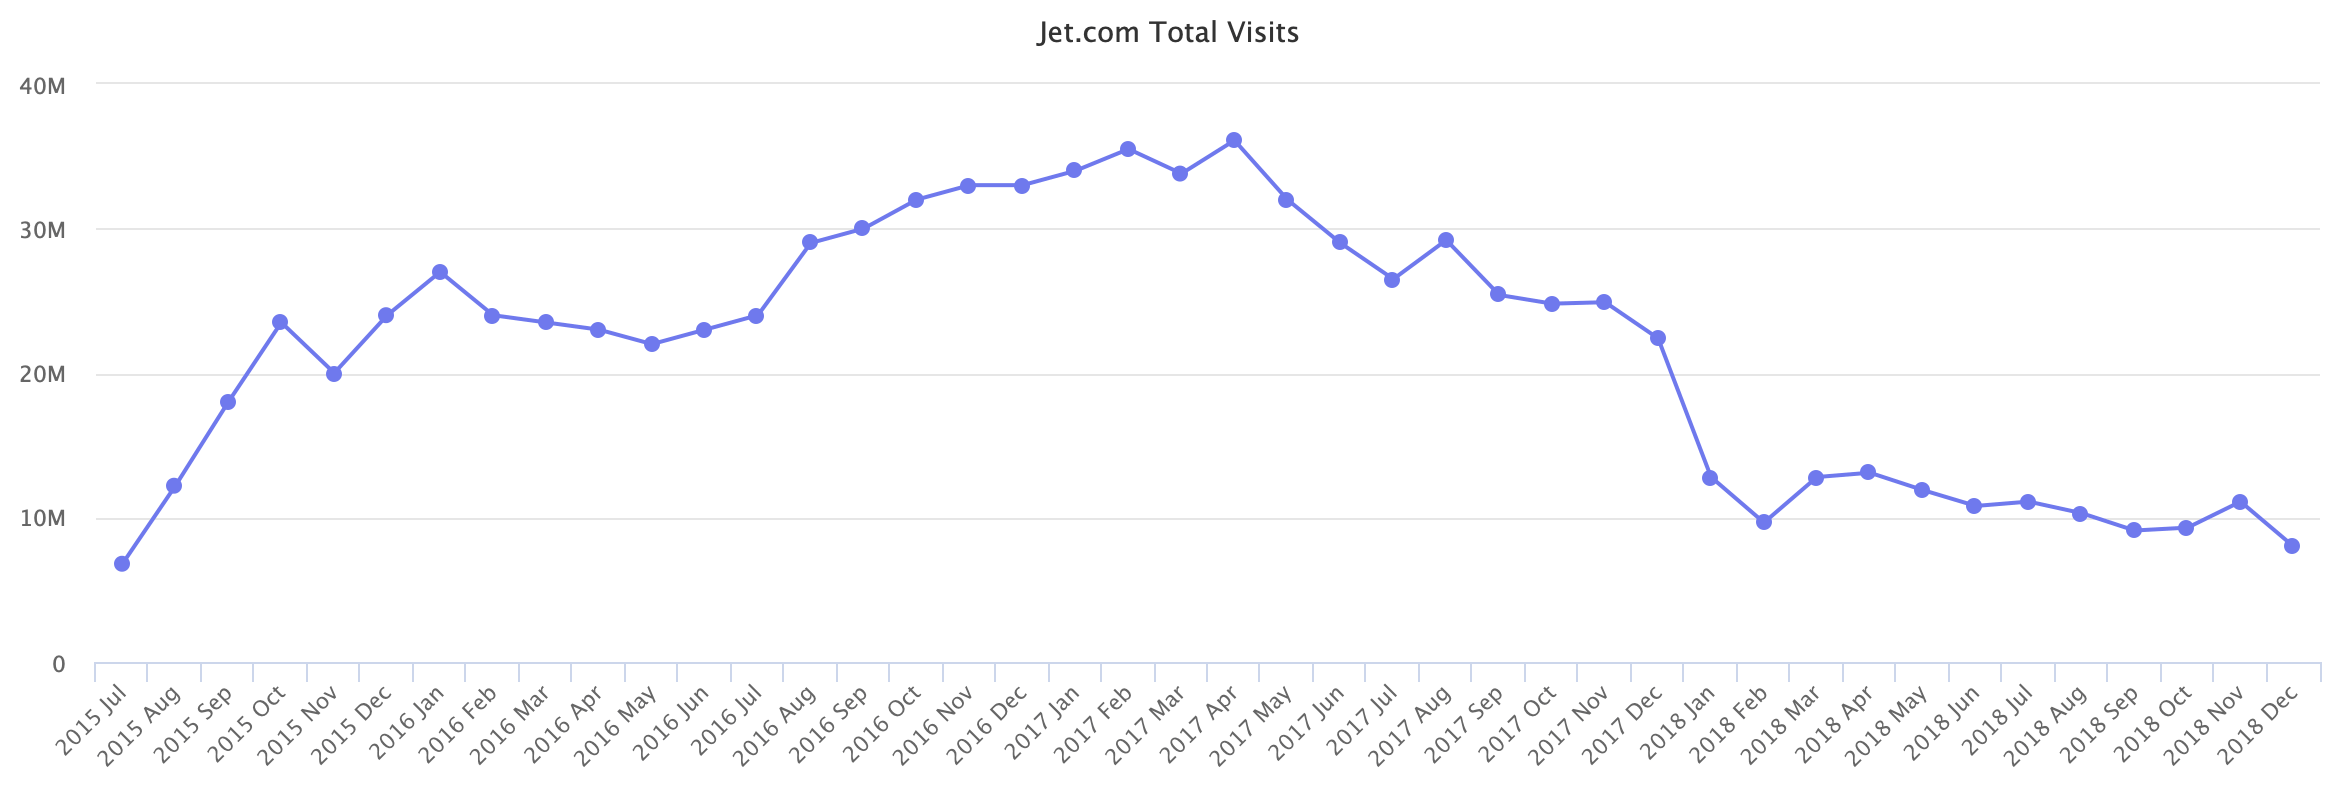 Jet.com Total Visits